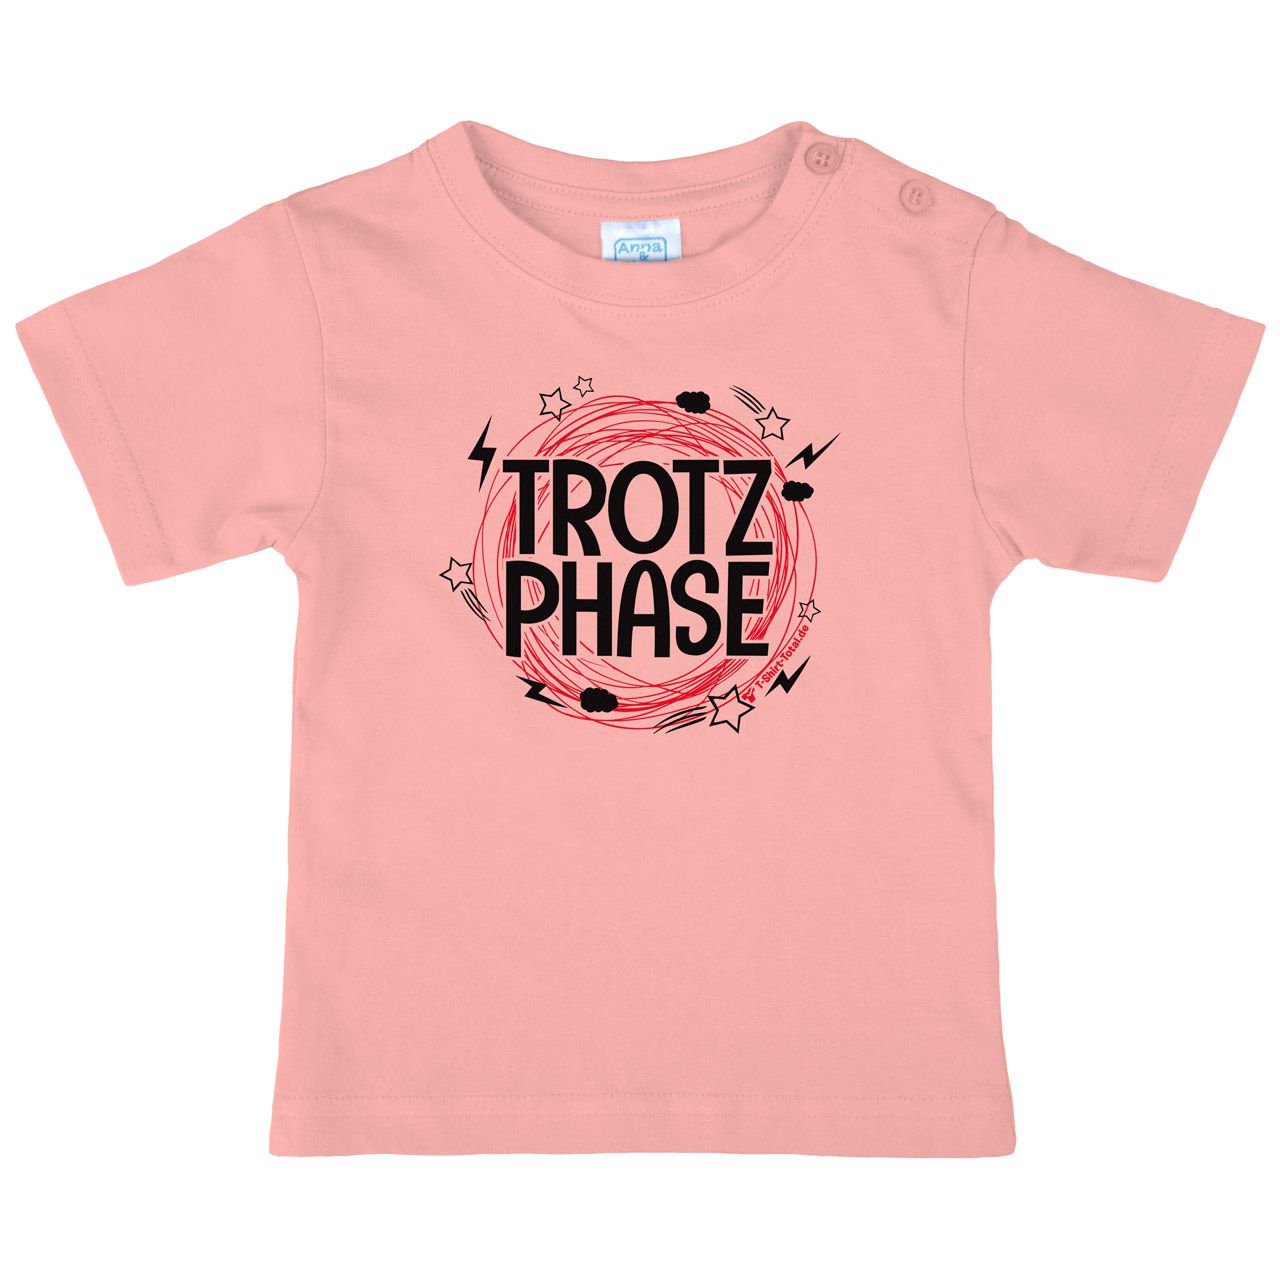 Trotzphase Kinder T-Shirt rosa 104